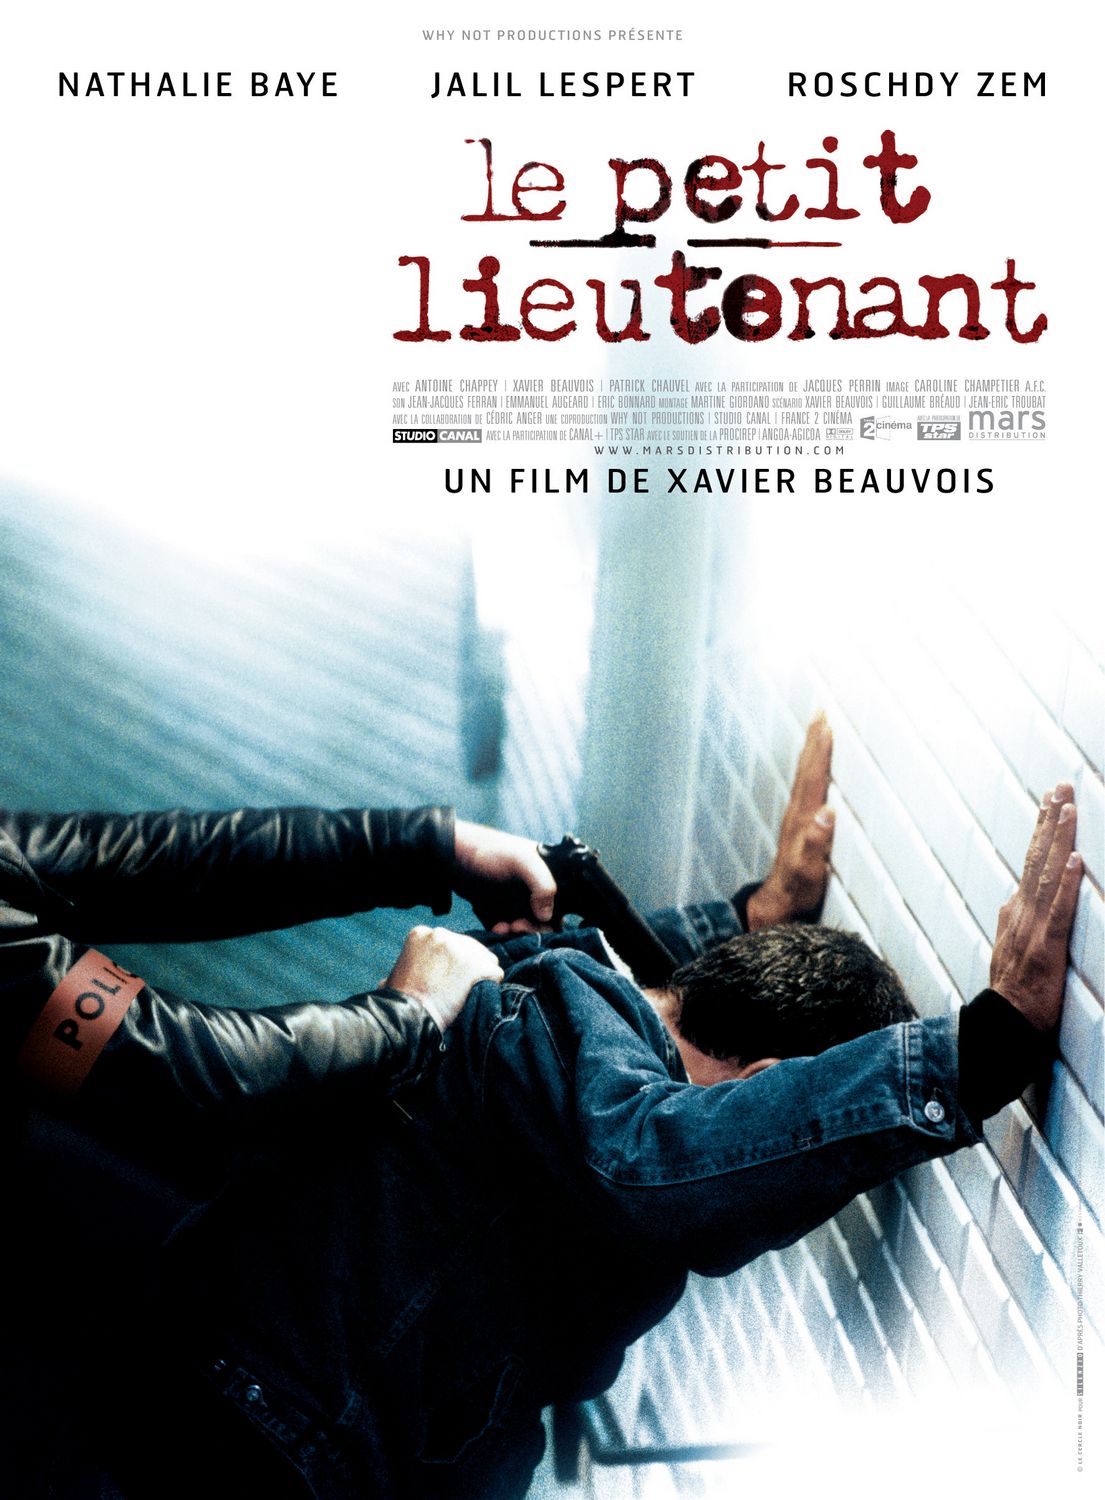 Extra Large Movie Poster Image for Petit lieutenant, Le 